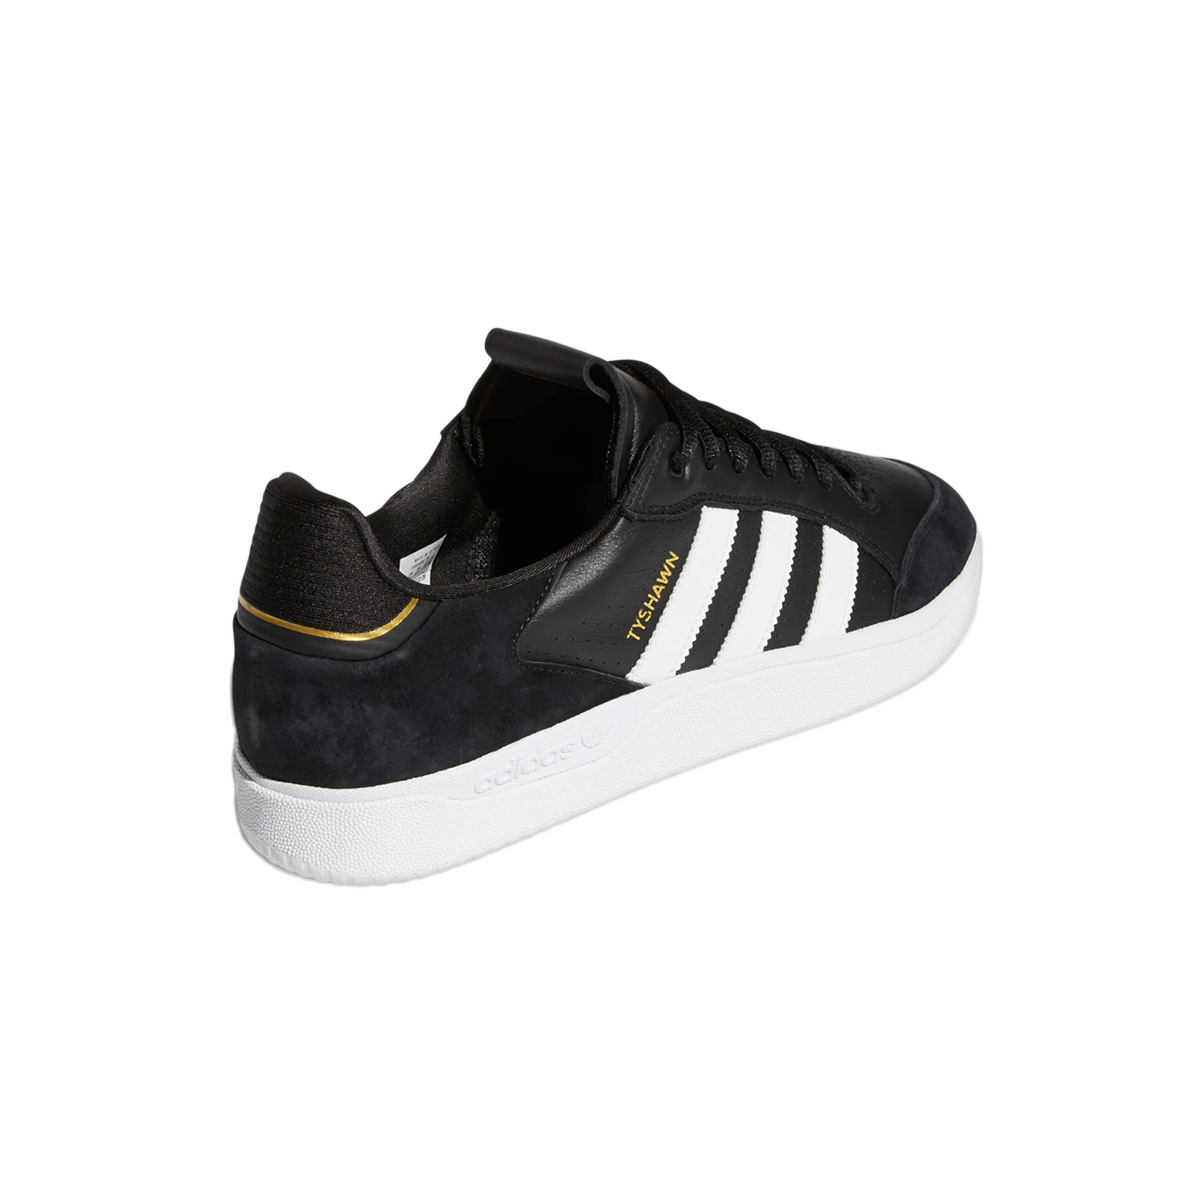 Adidas Tyshawn Low Shoes - Black/White